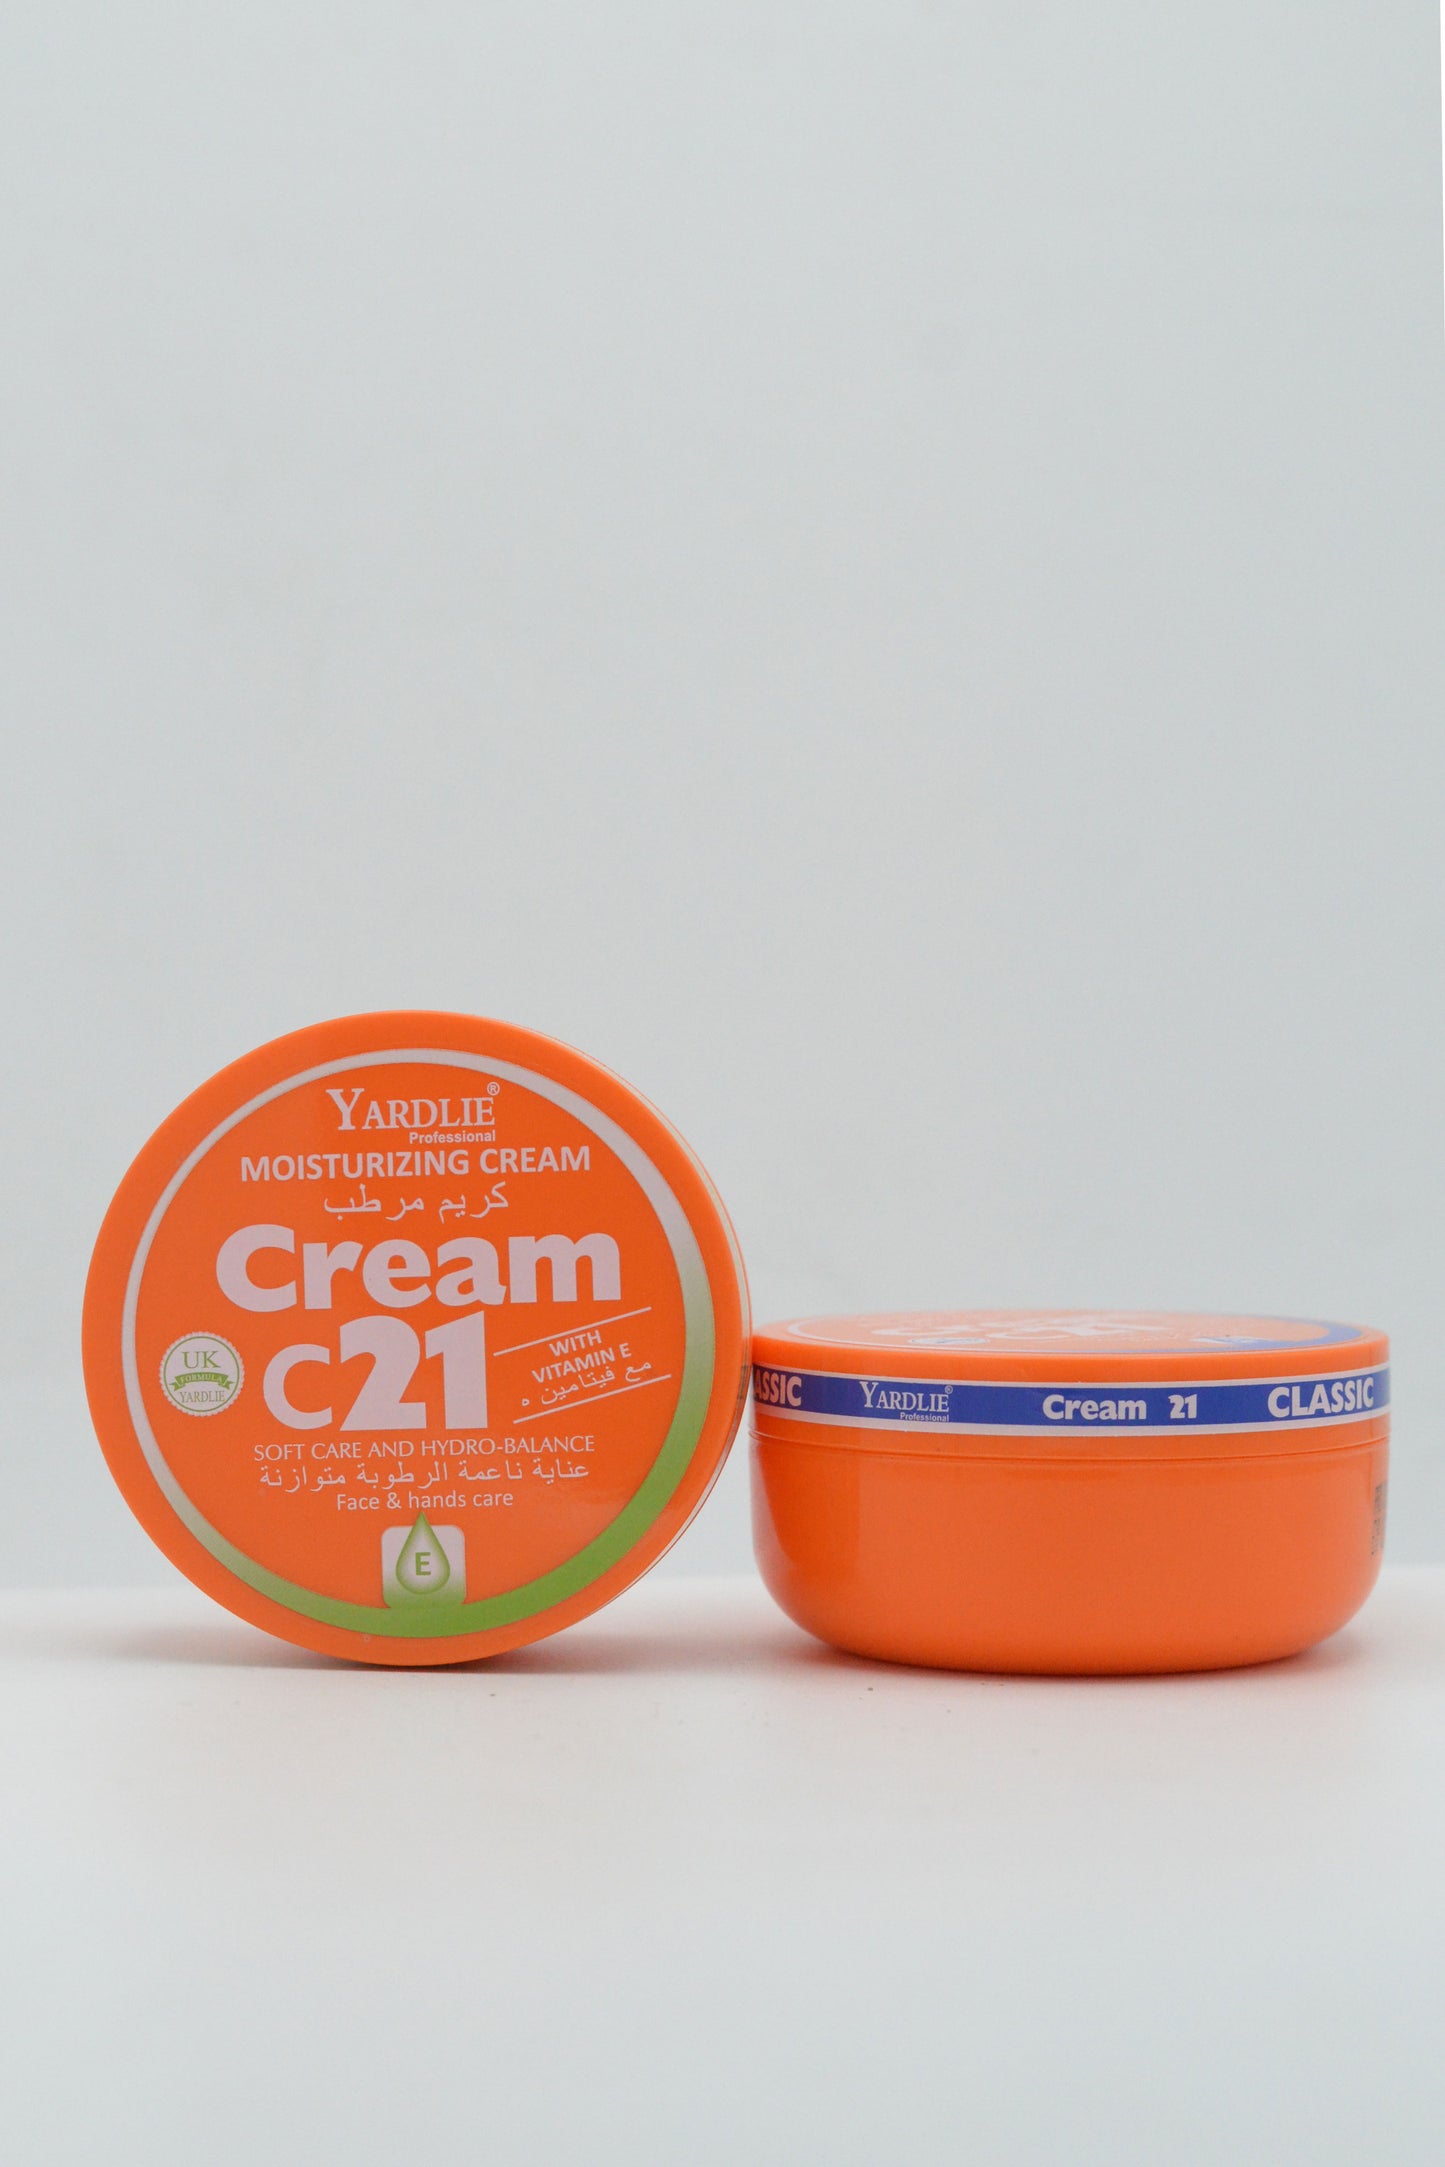 Yardlie C21 Moisturizing cream with Vitamin E 200g.